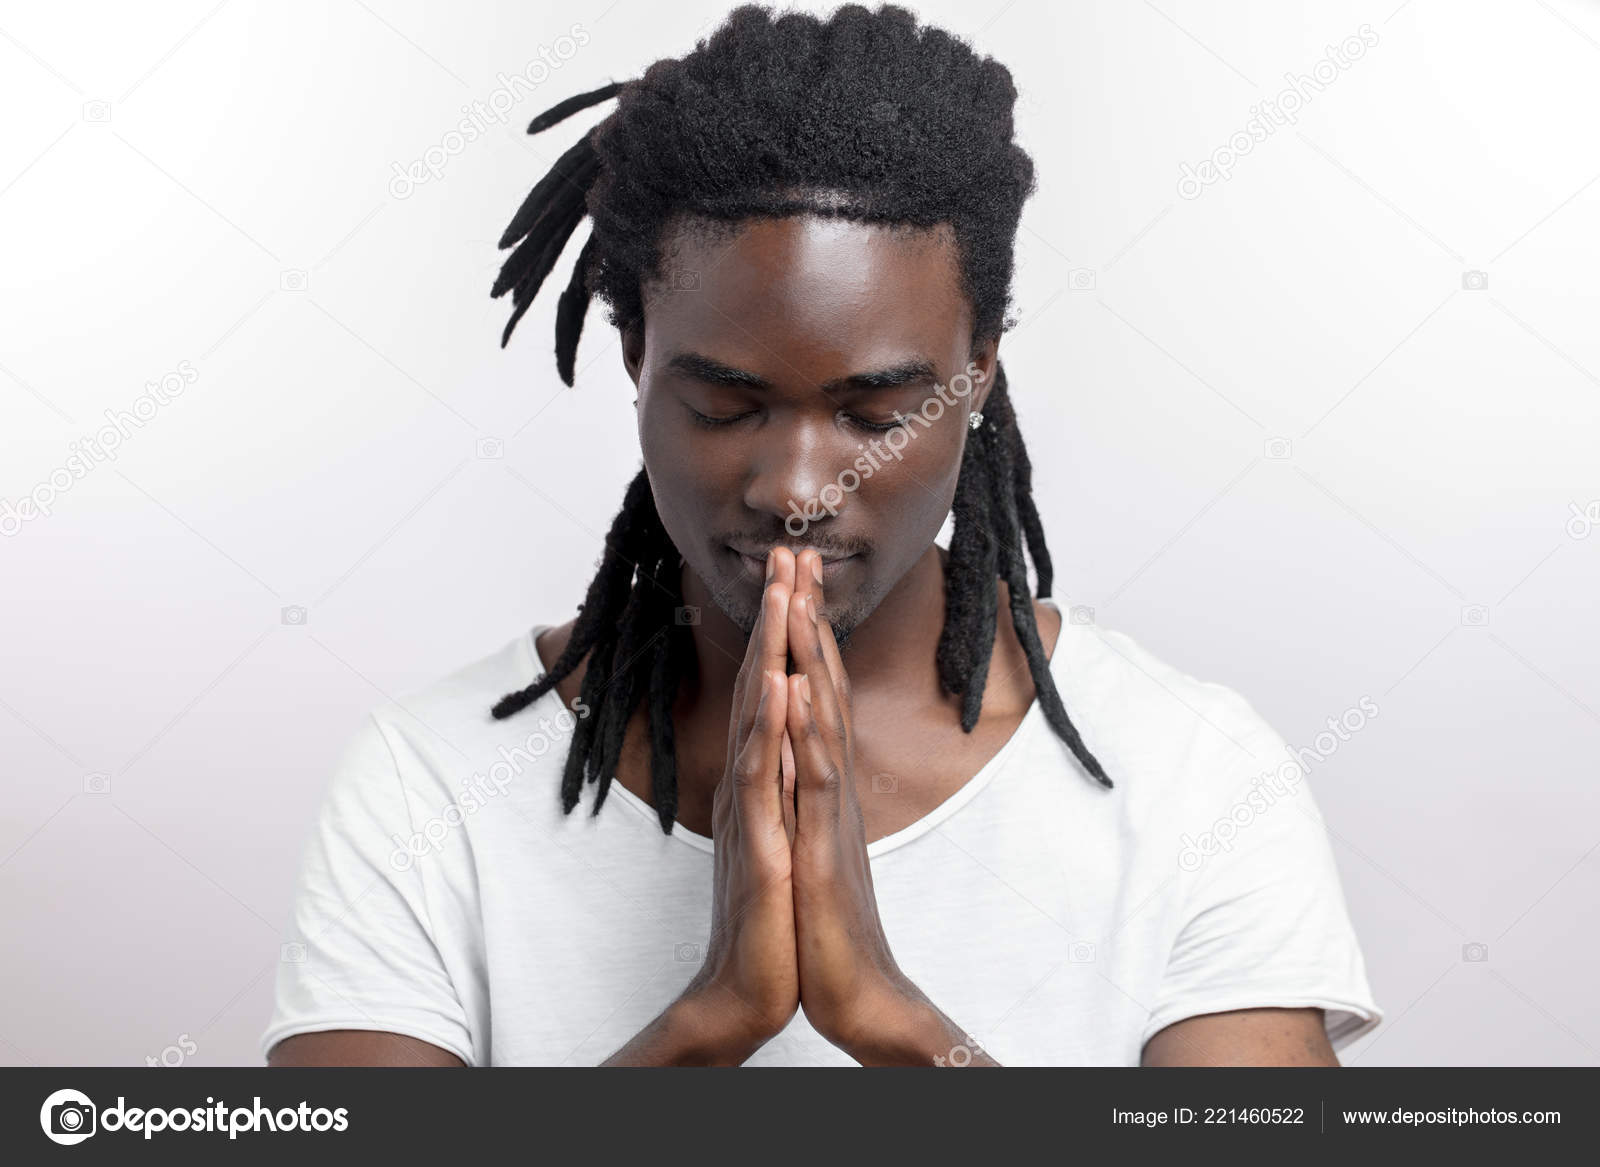 Close Up Of Black Man With Dreadlocks Praying On White